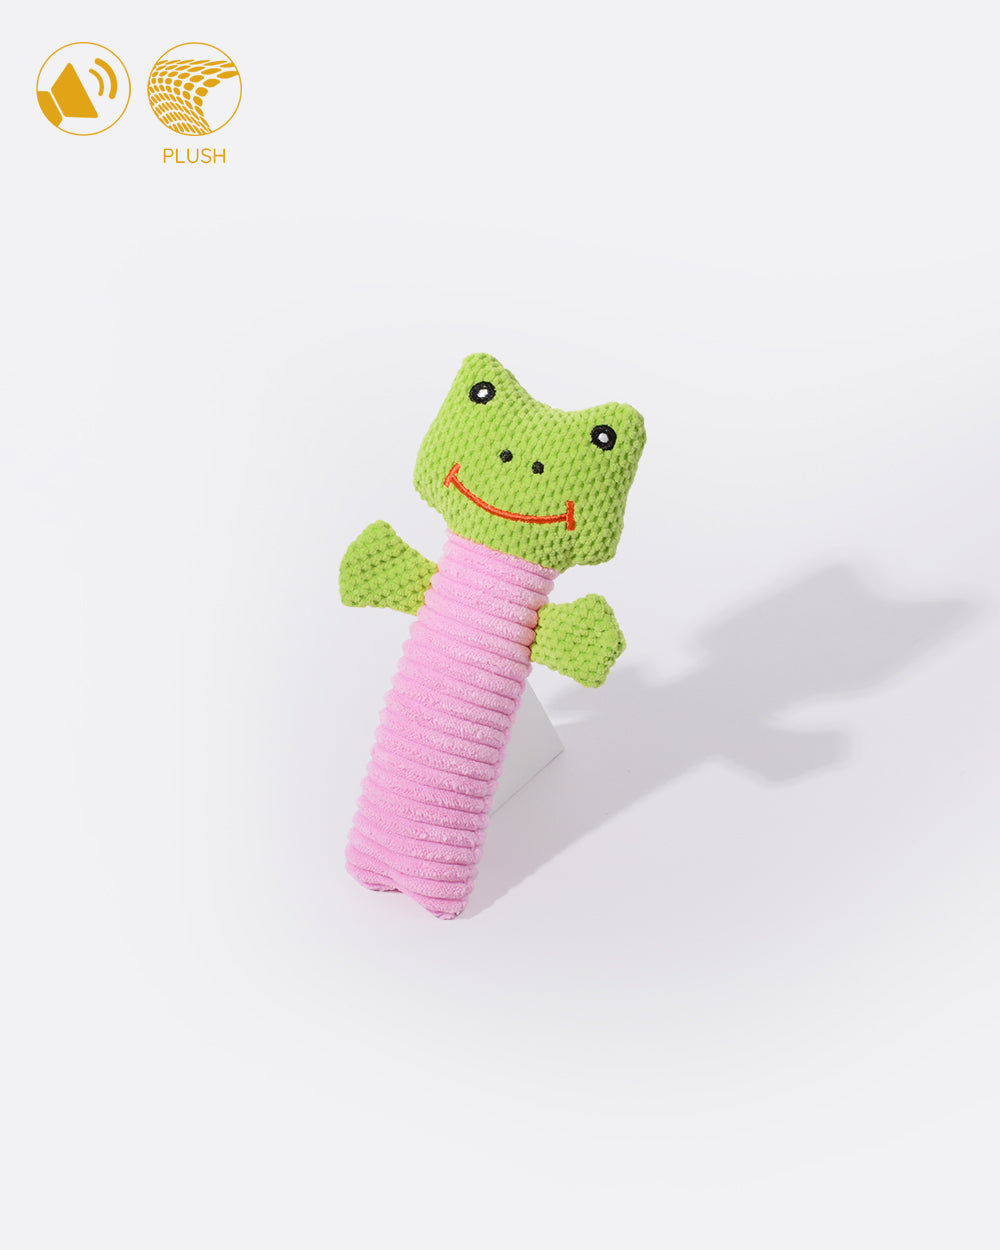 Plush Squeaky Dog Toy - Frog